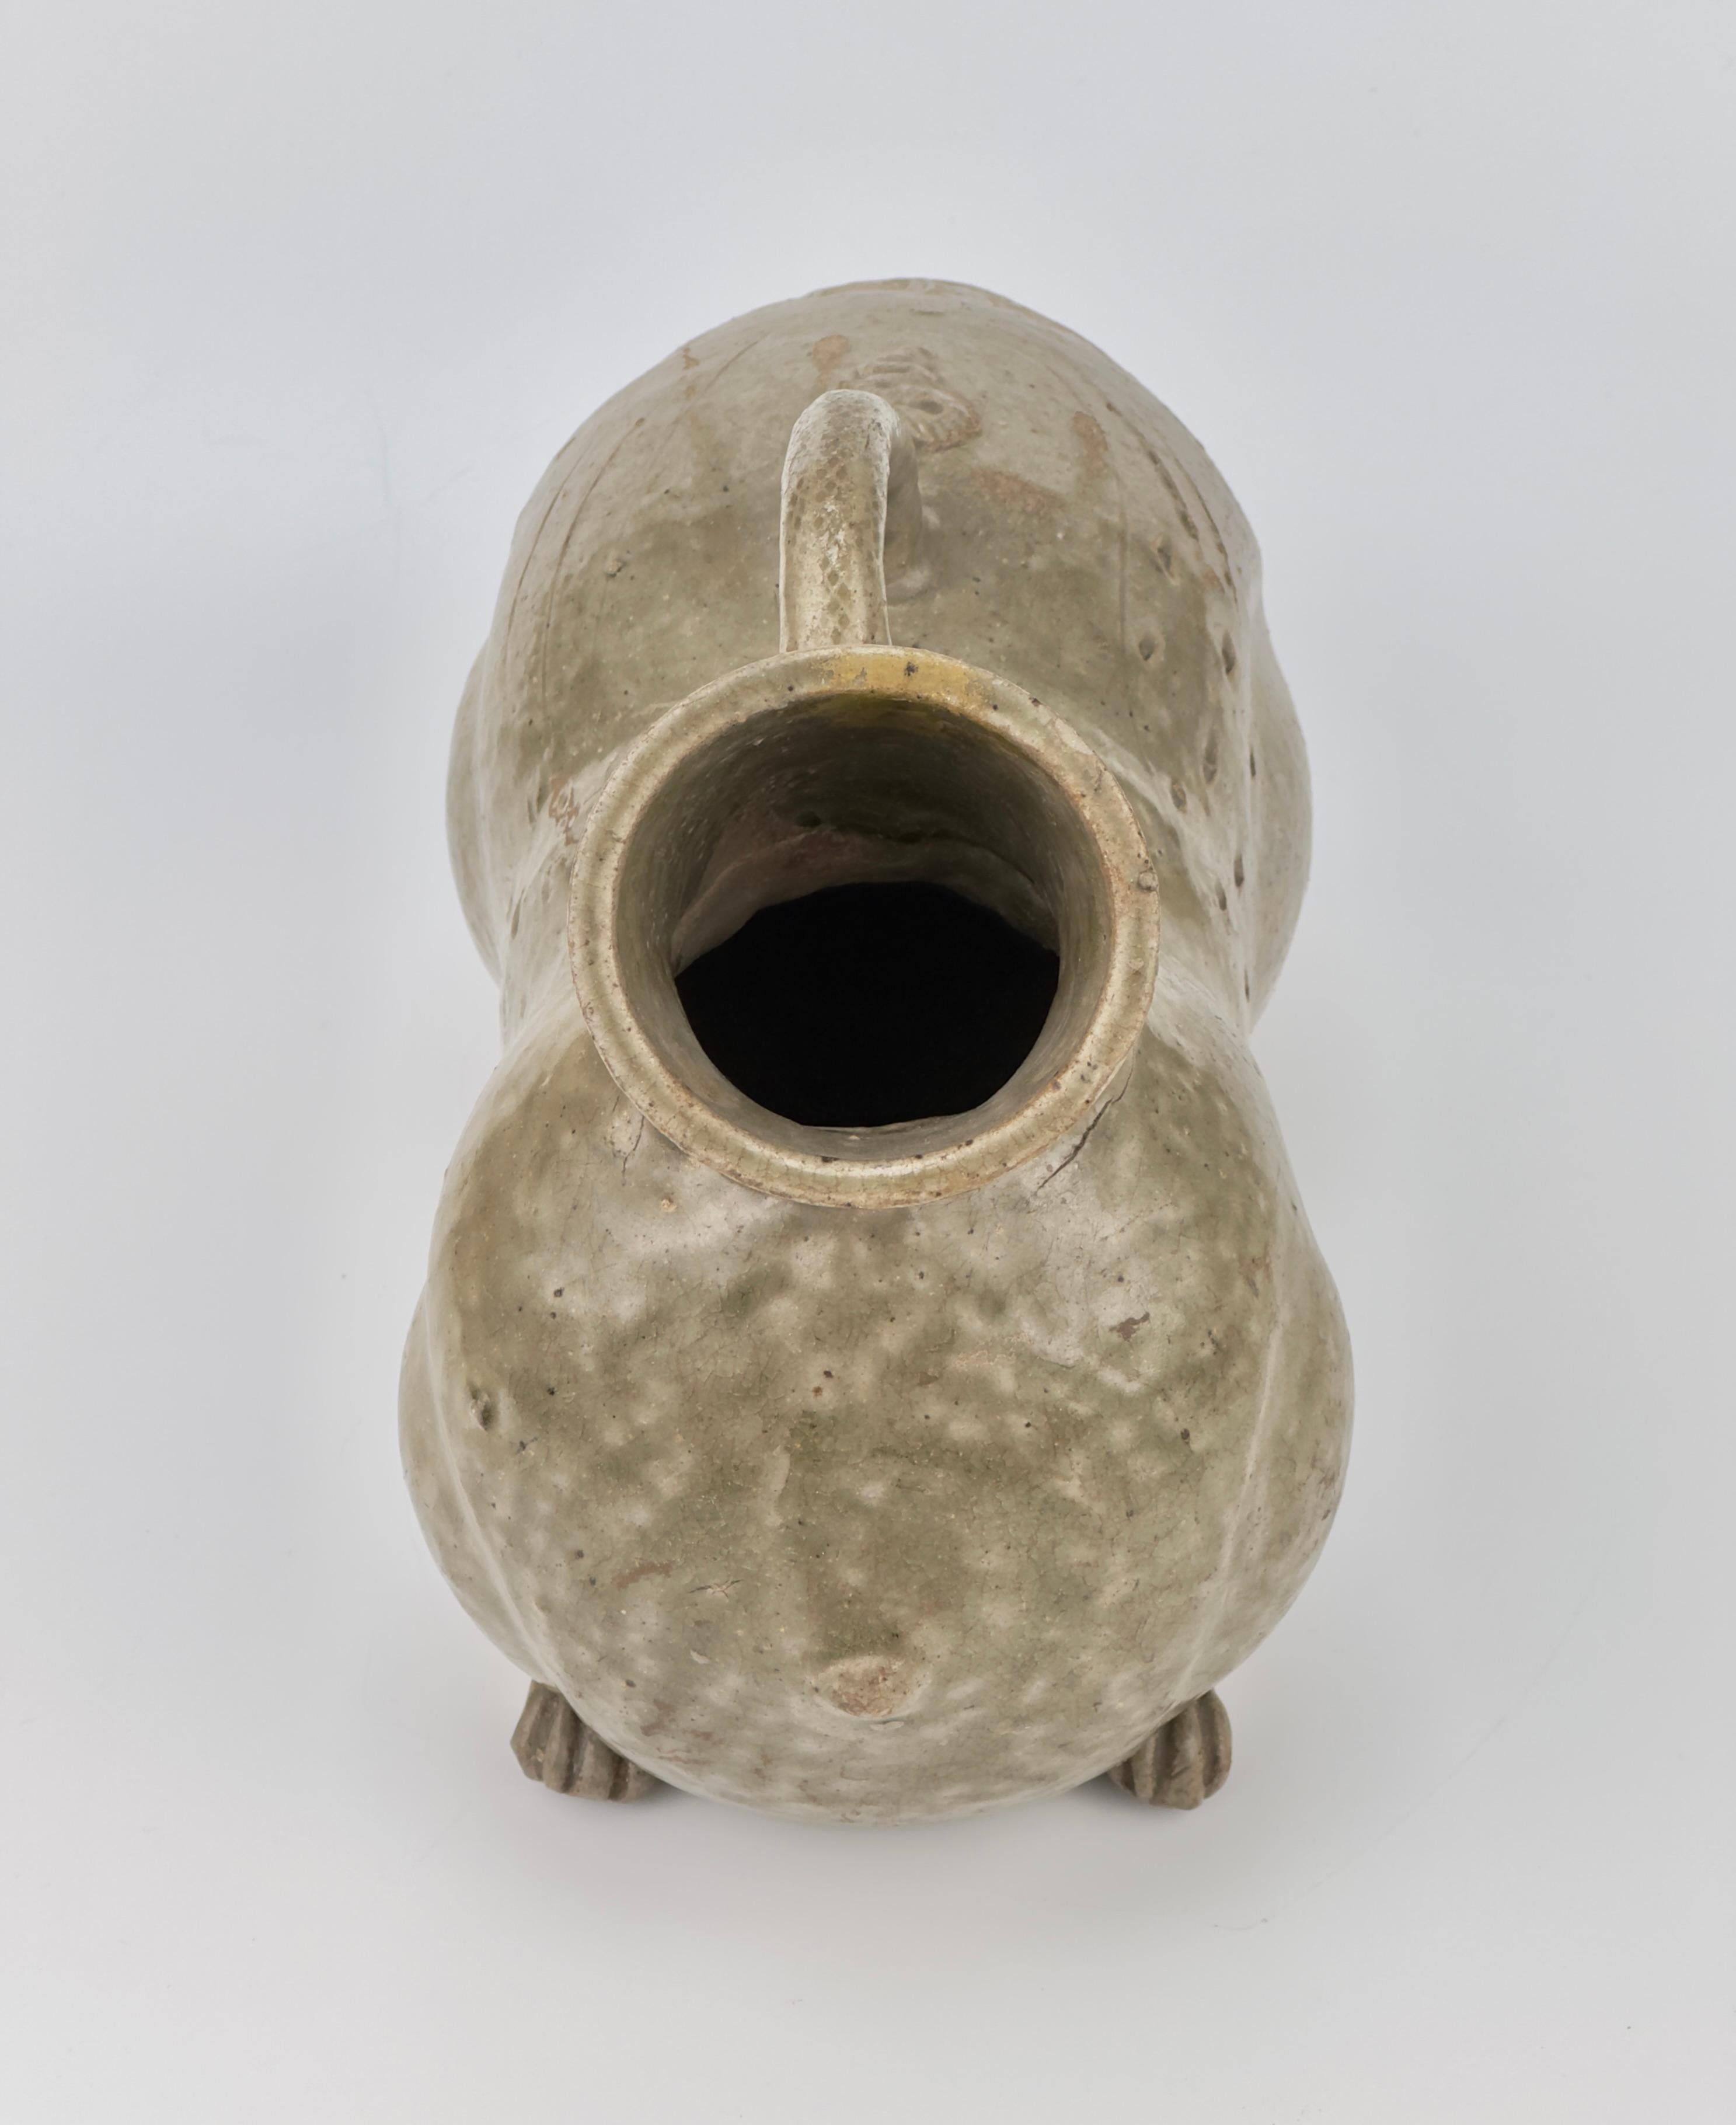 Rare Yue Celadon-Glazed Figural Vessel, Western Jin dynasty (265-420) For Sale 1